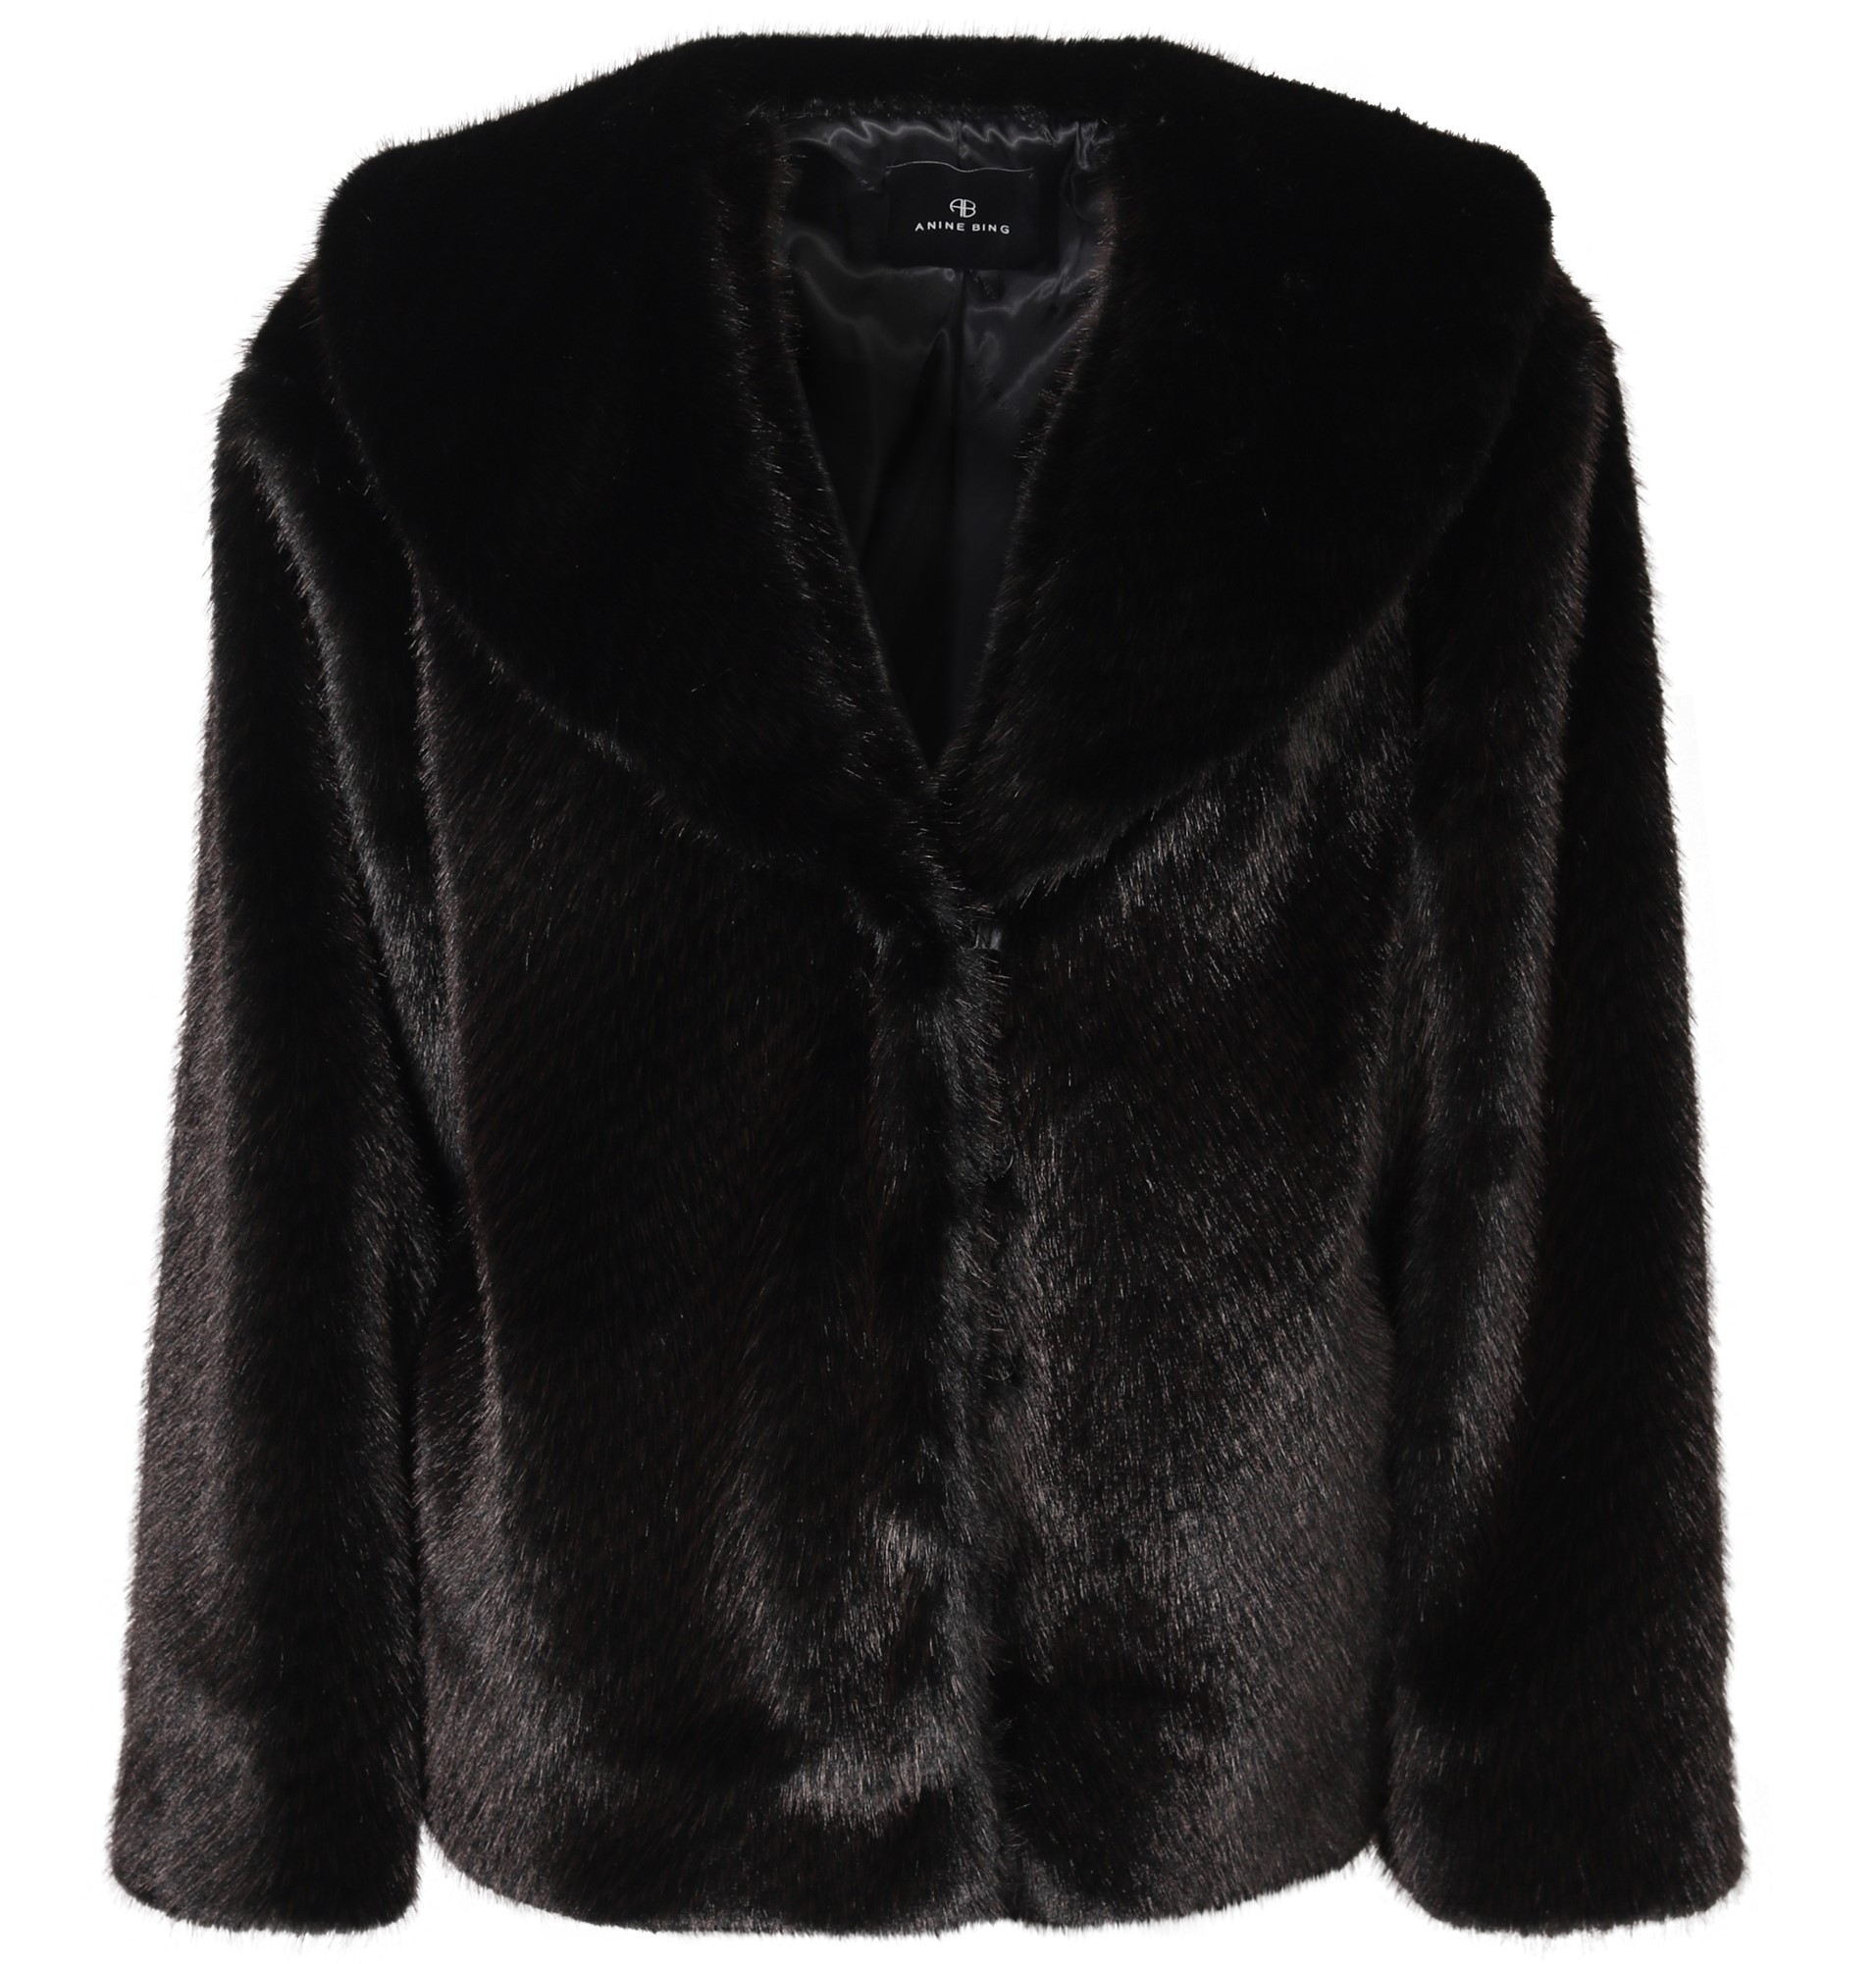 ANINE BING Hilary Faux Fur Jacket in Black/Brown